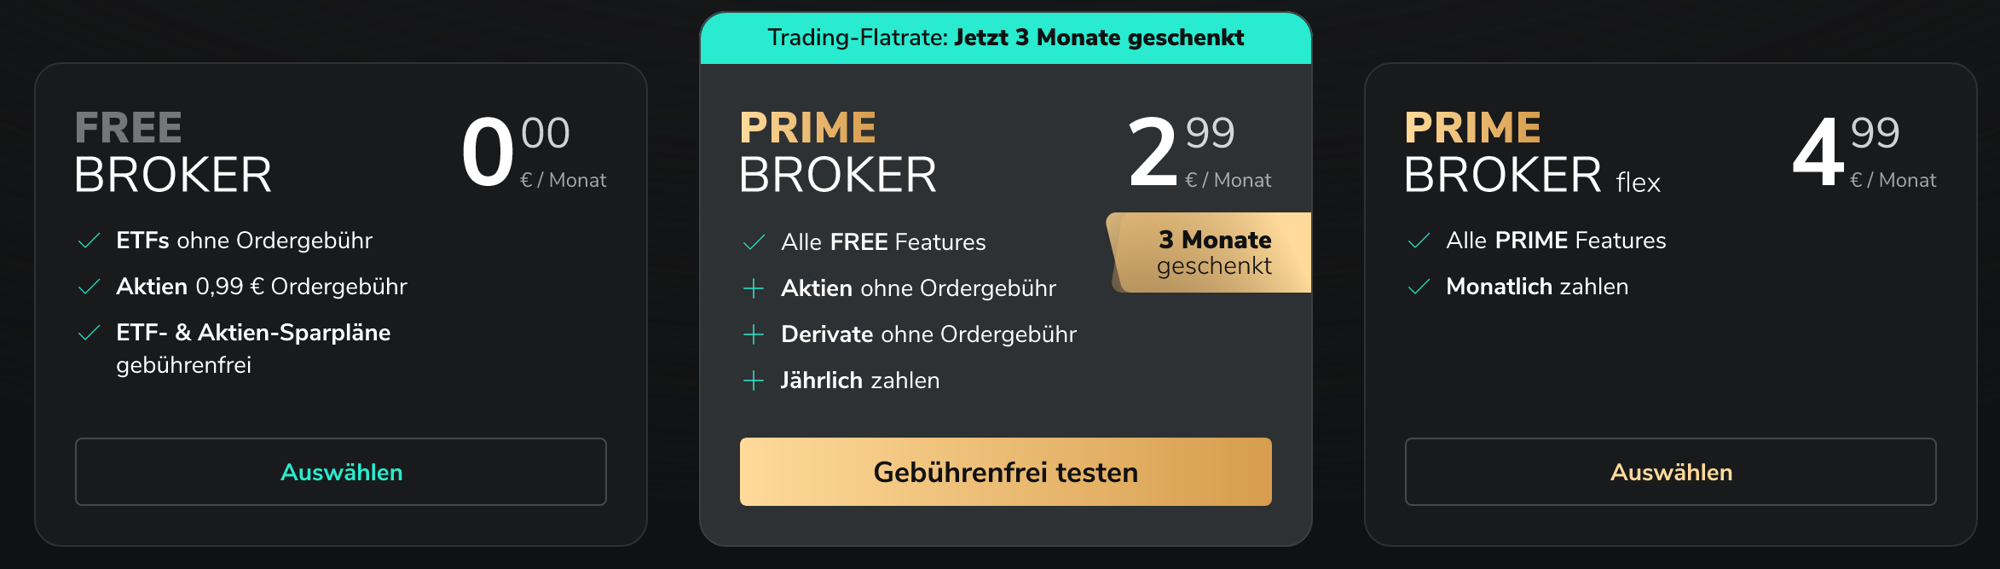 Scalable Capital Test broker 3 Modelle Free Broker Prime Broker Prime broker flex vergleich scalable depot vergleich